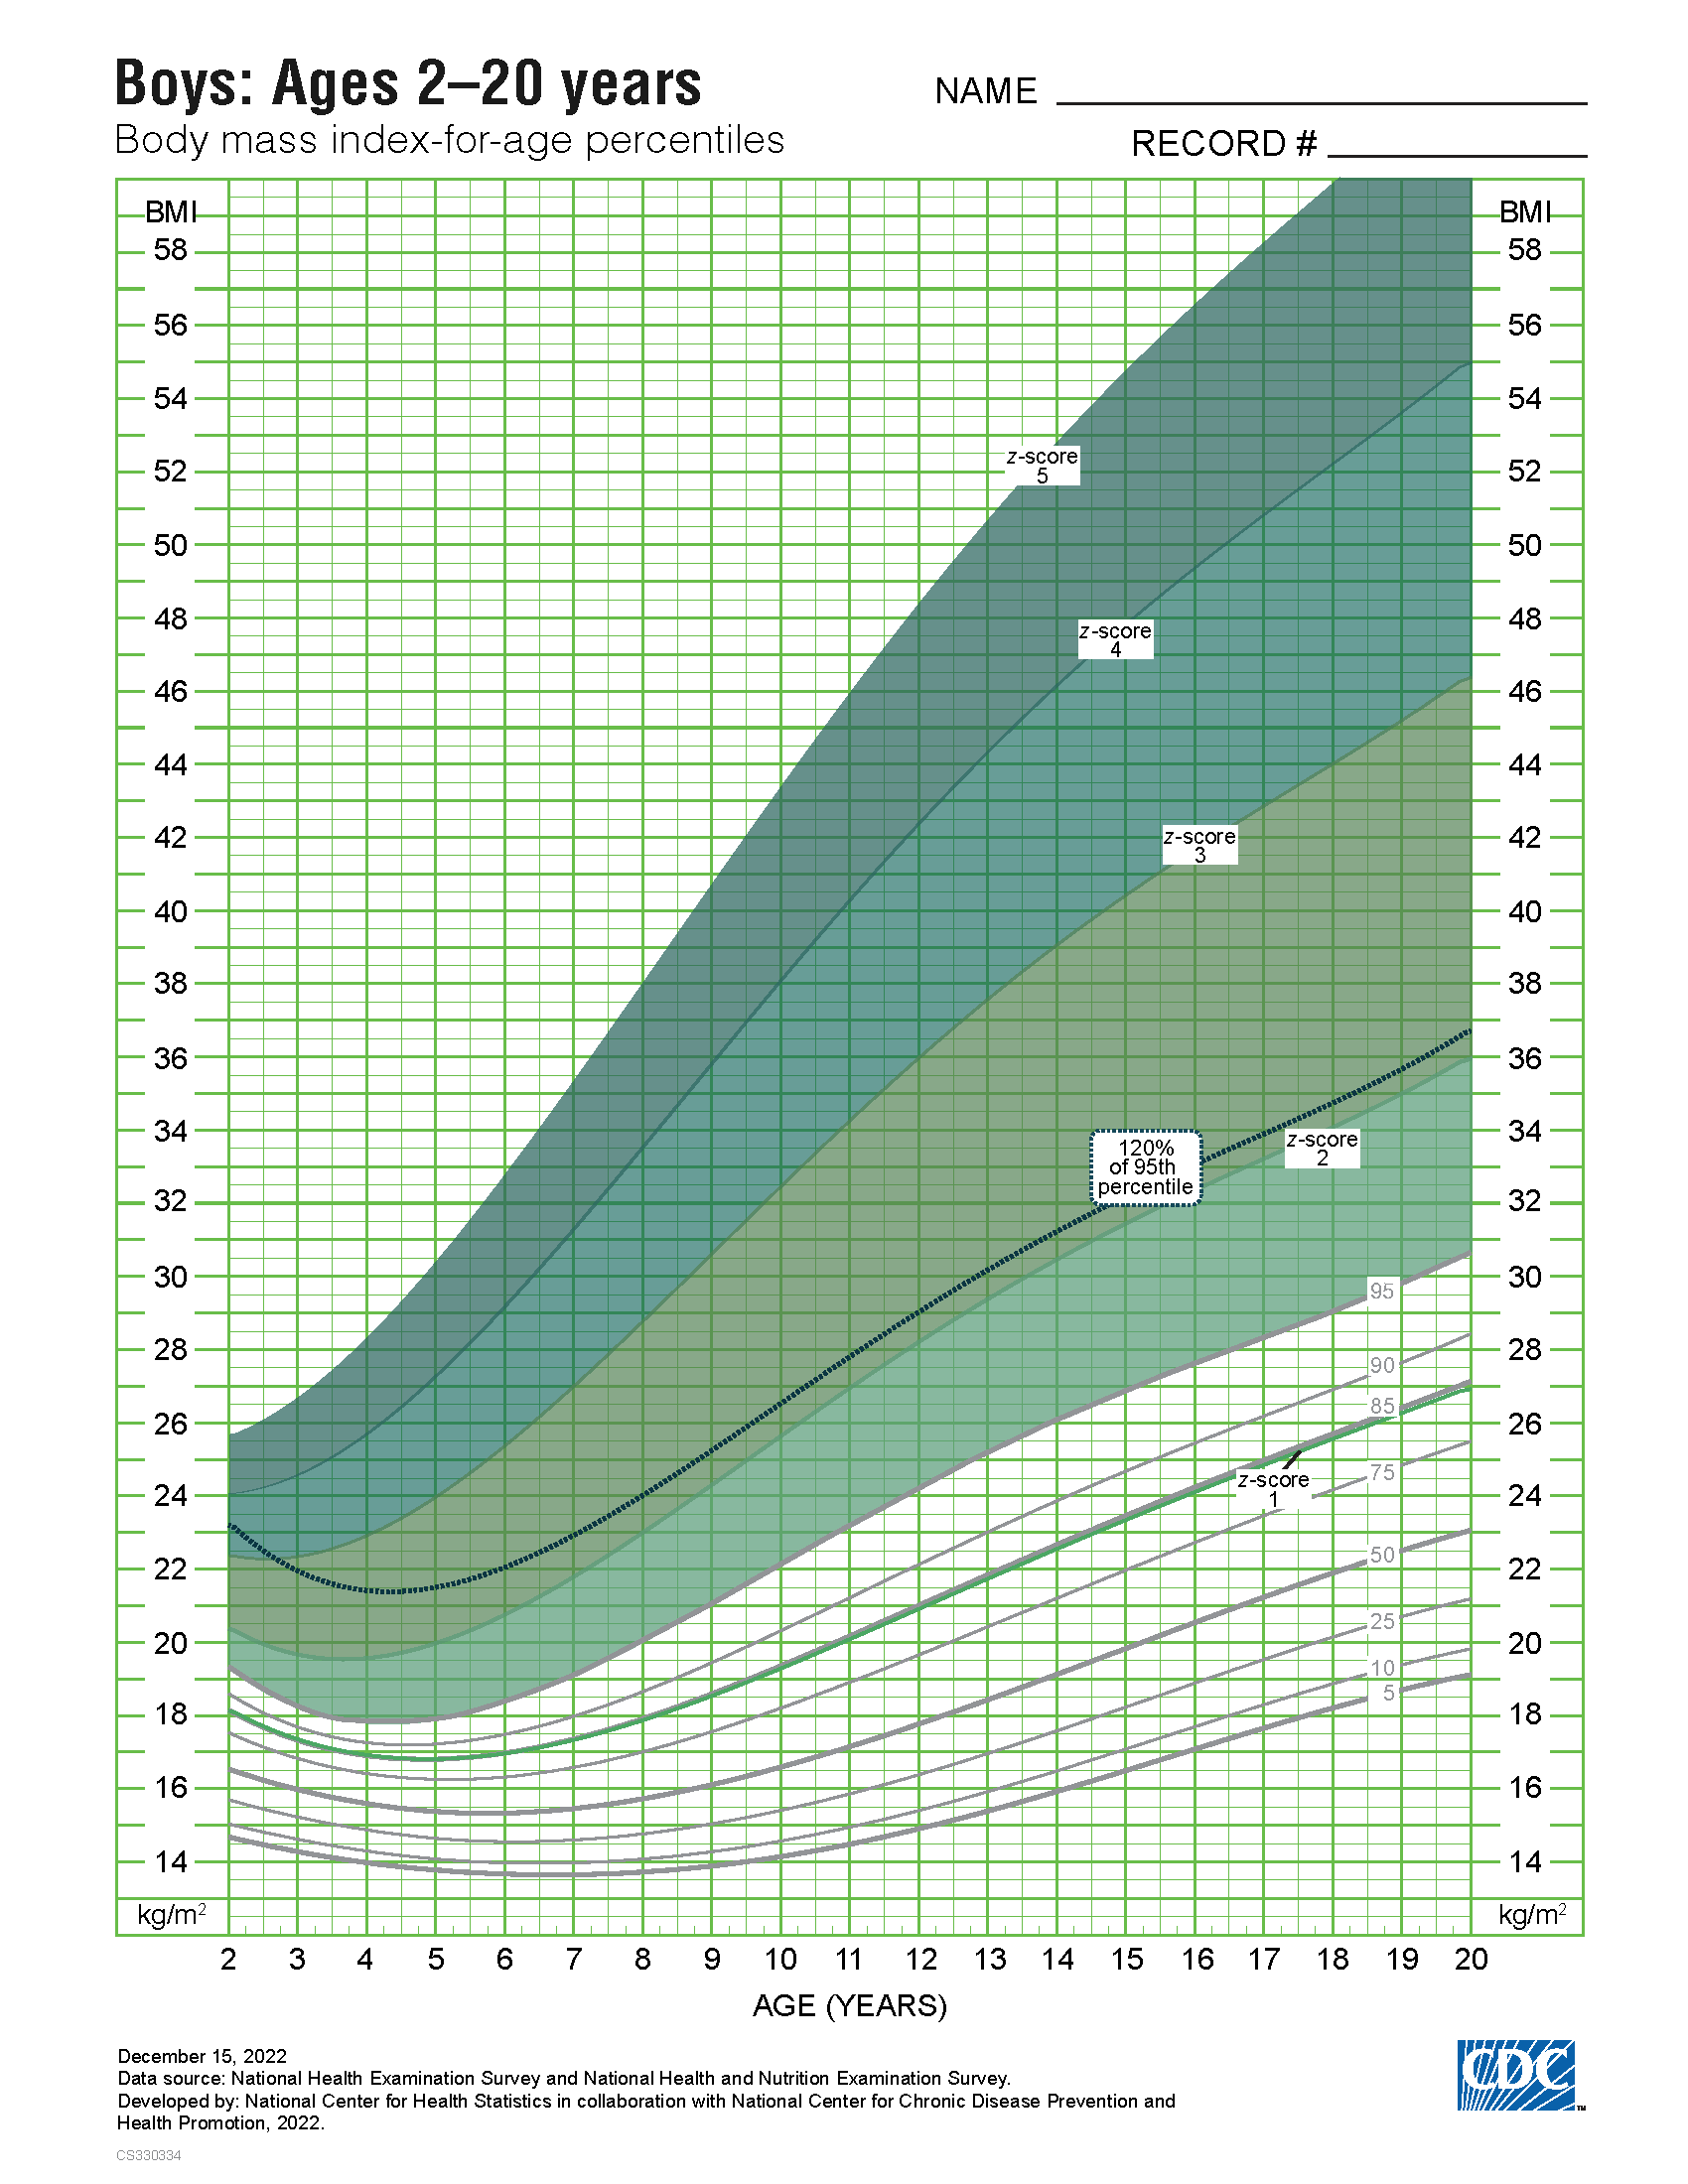 BMI-Age-percentiles-BOYS-Z-Scores